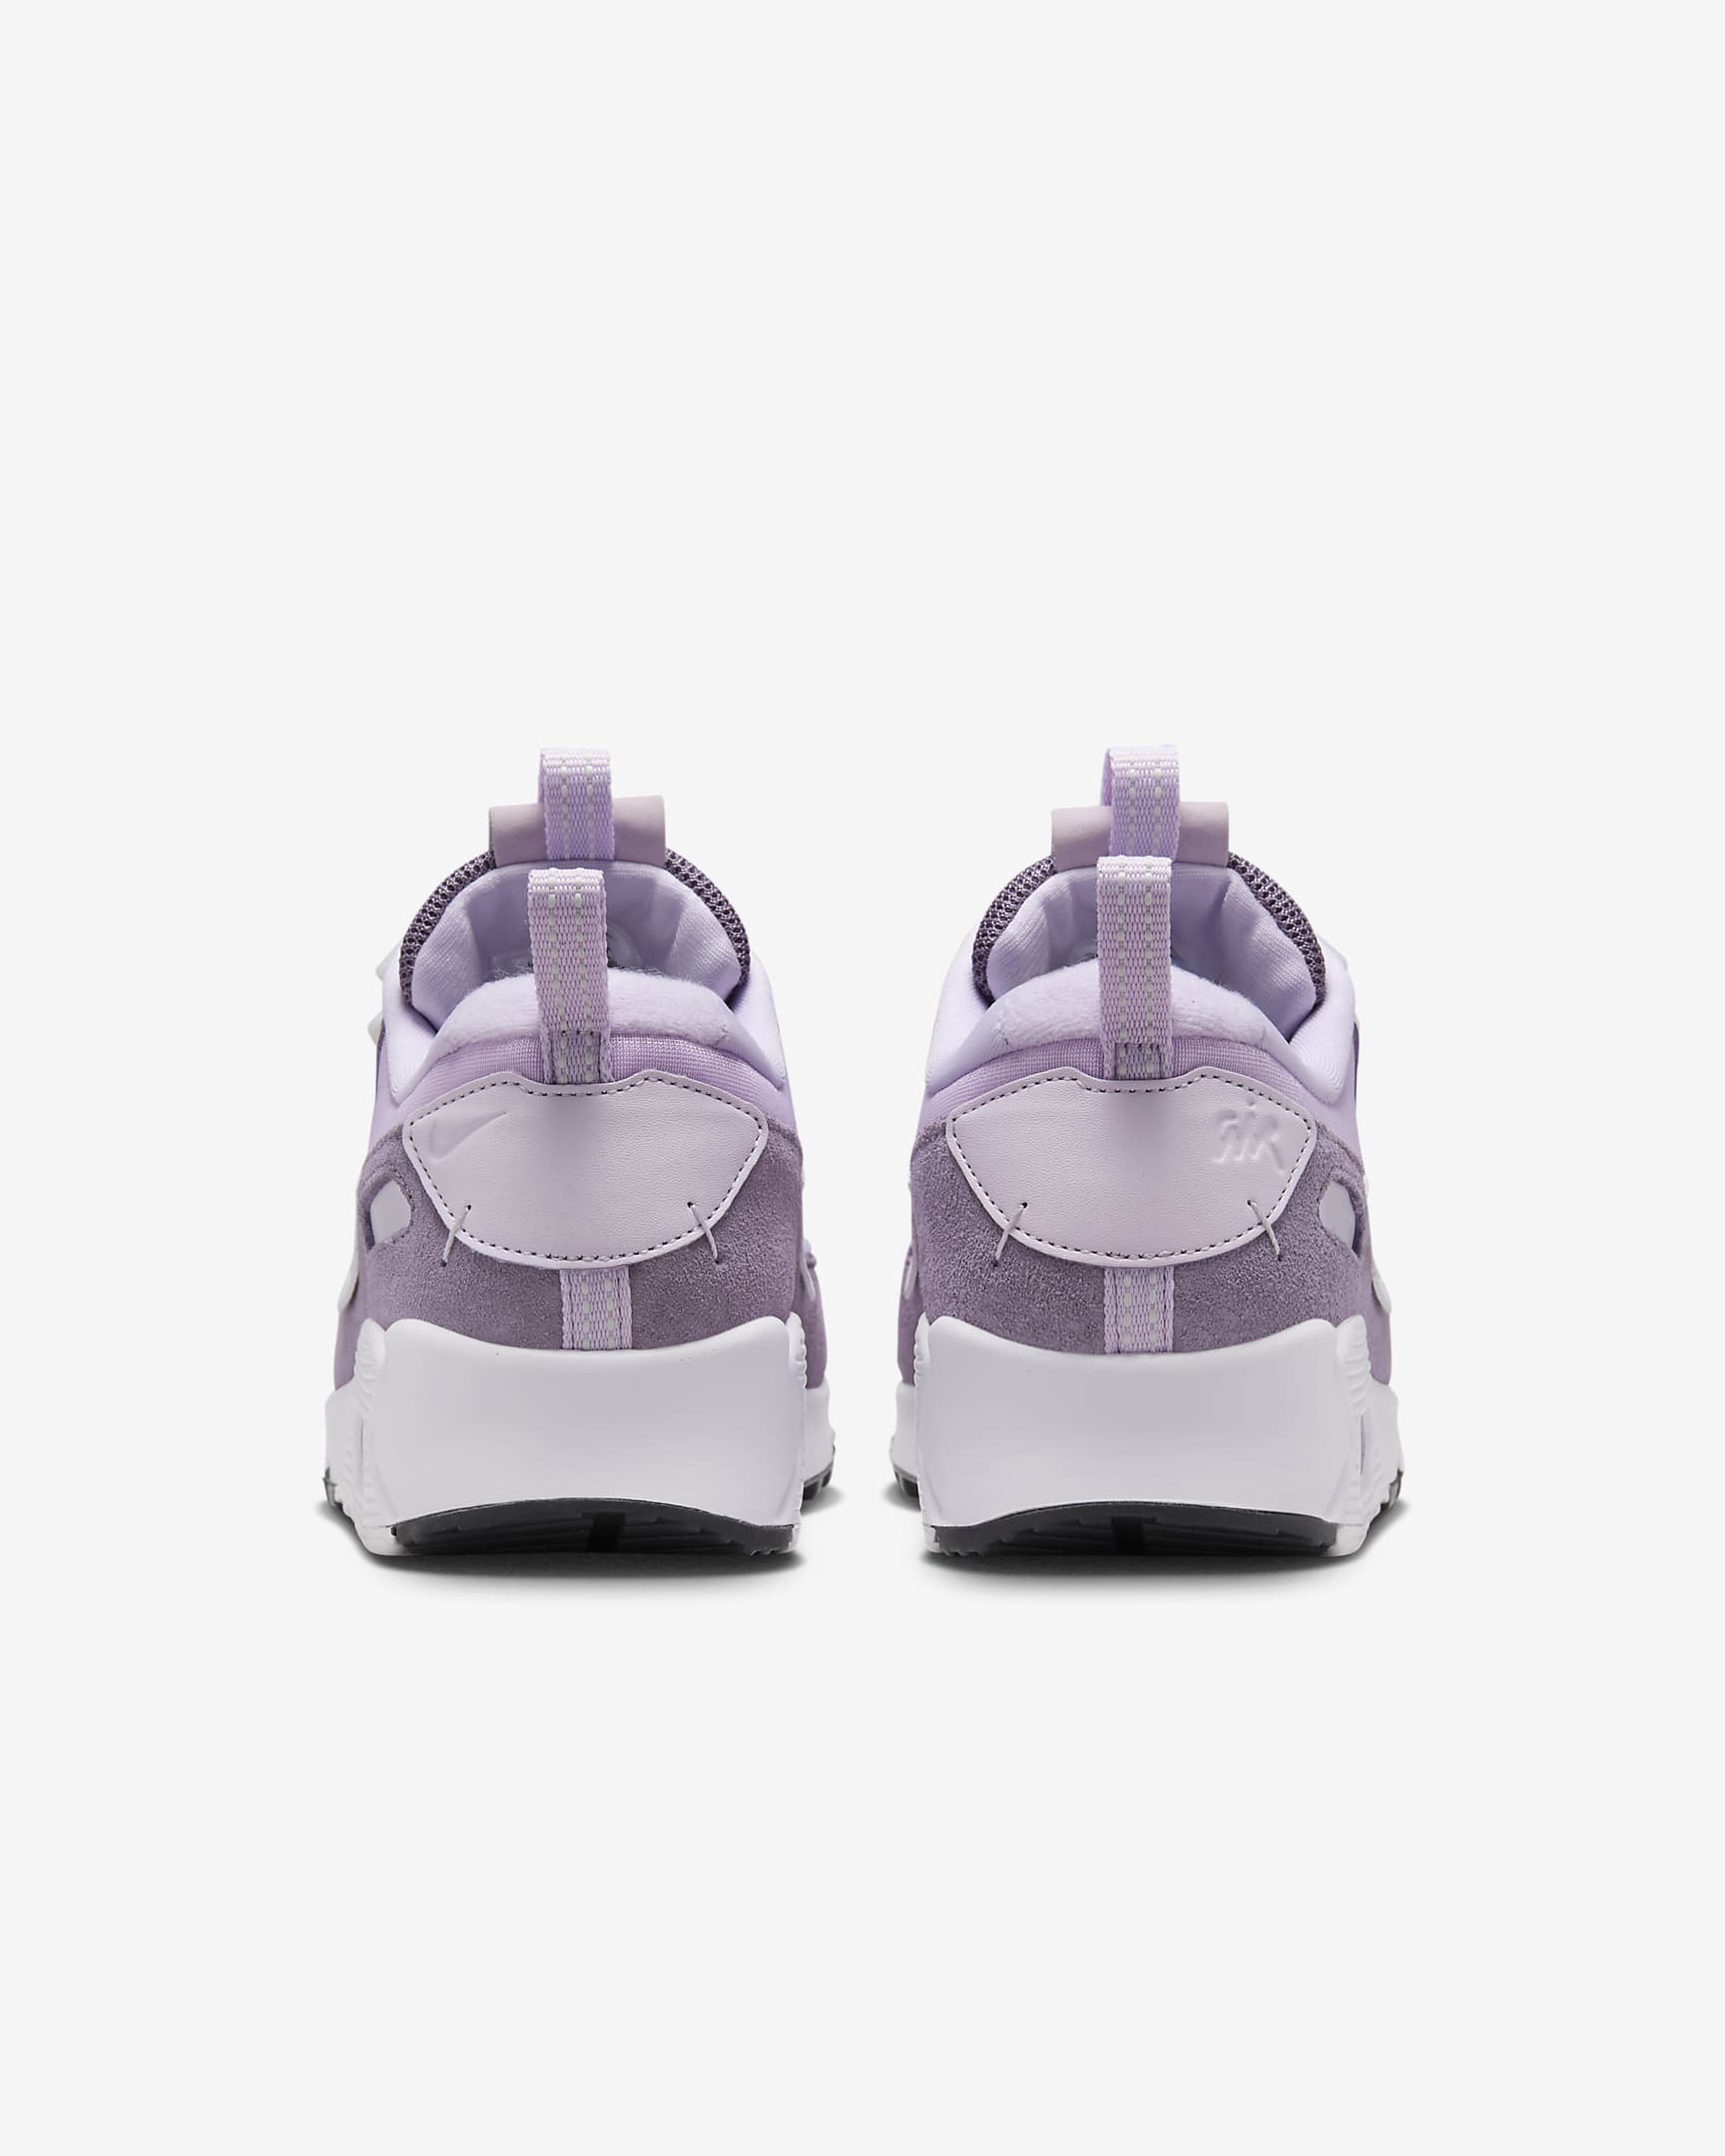 Nike Air Max 90 Futura Women's Shoes - Daybreak/Lilac Bloom/Black/Barely Grape